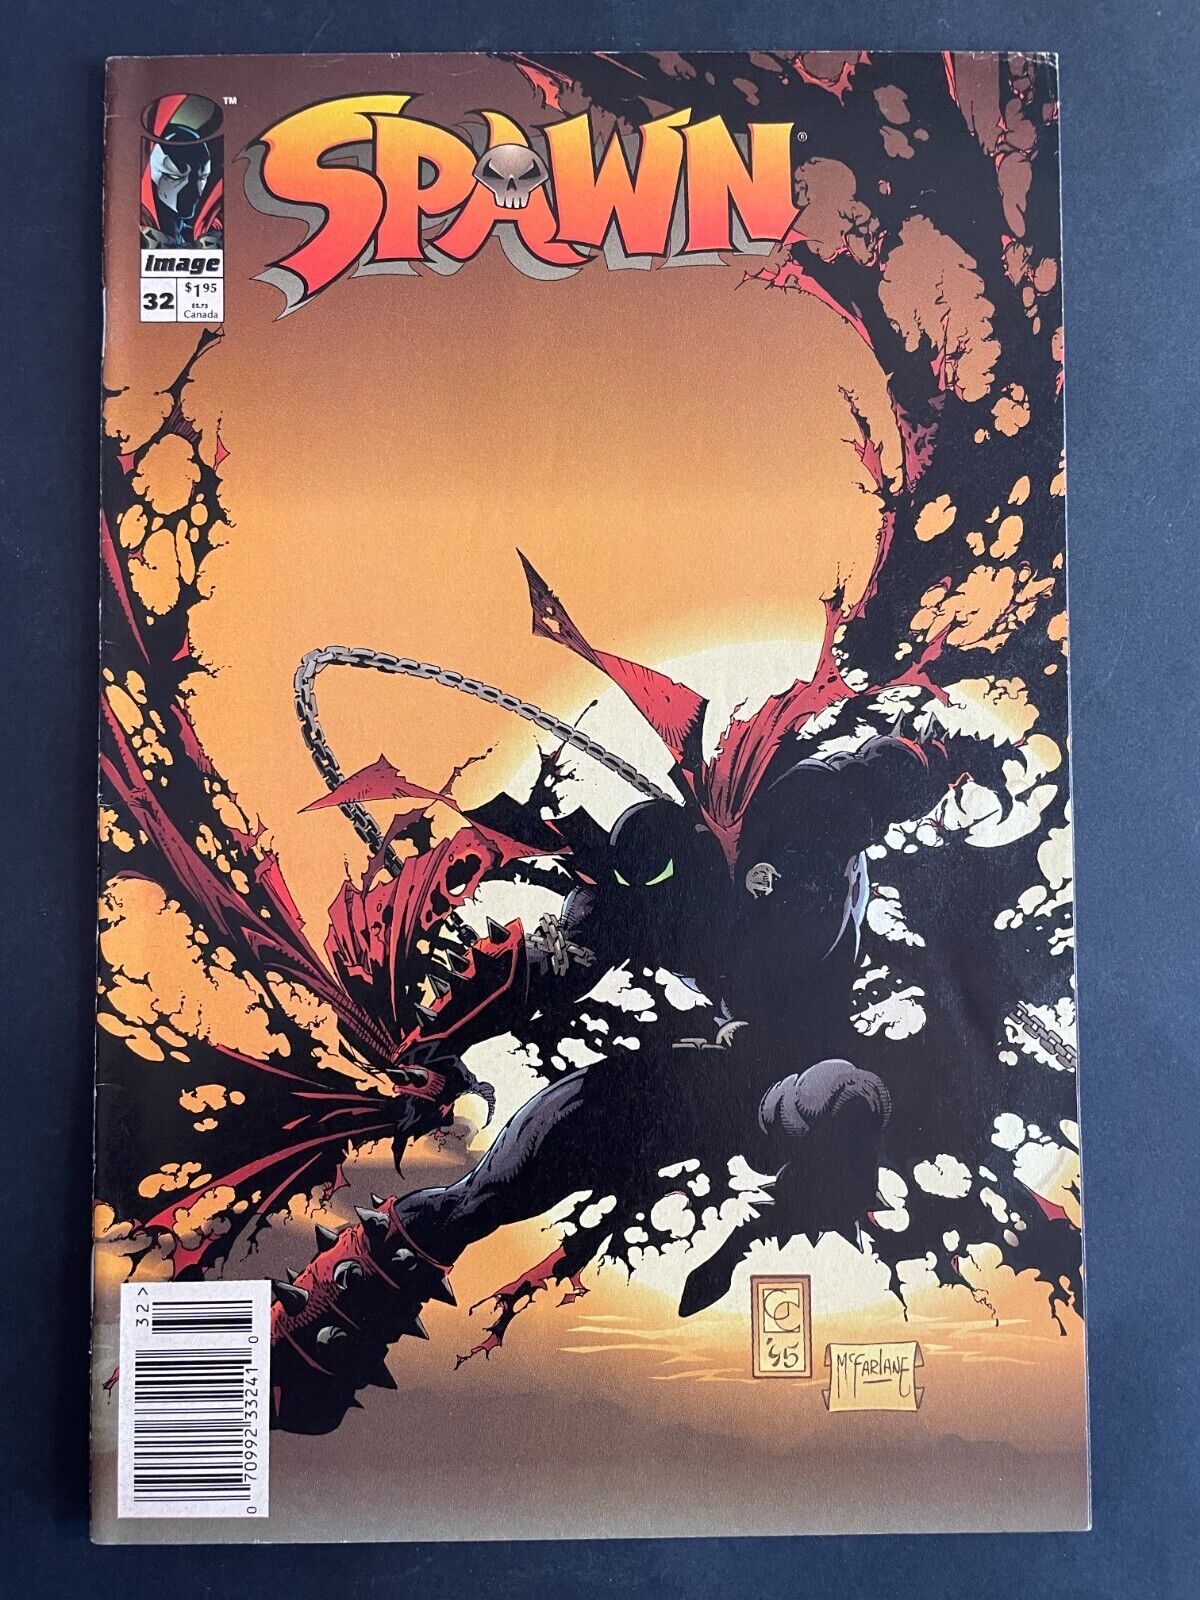 Spawn #32 - Image 1995 Comics Todd McFarlane Newsstand